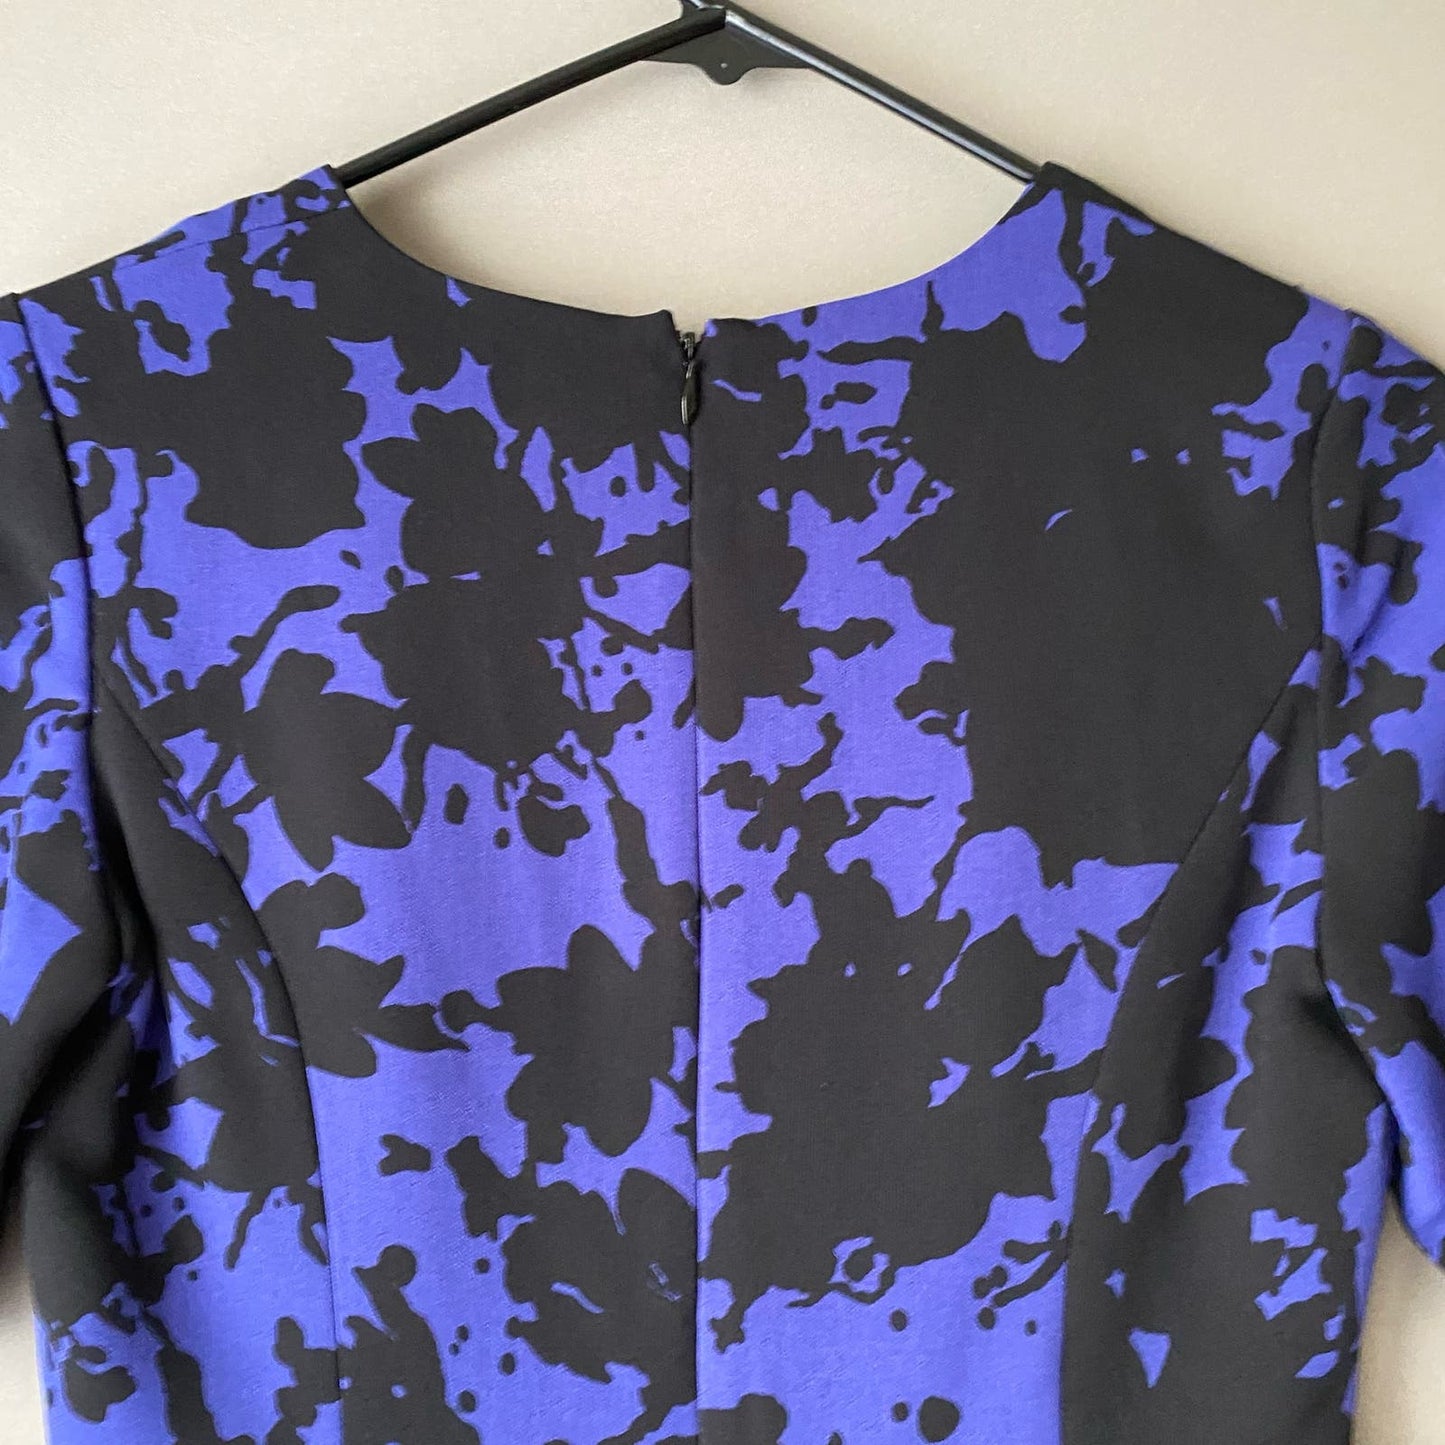 Adrianna Papell size 2 black and blue short sleeve sheath dress